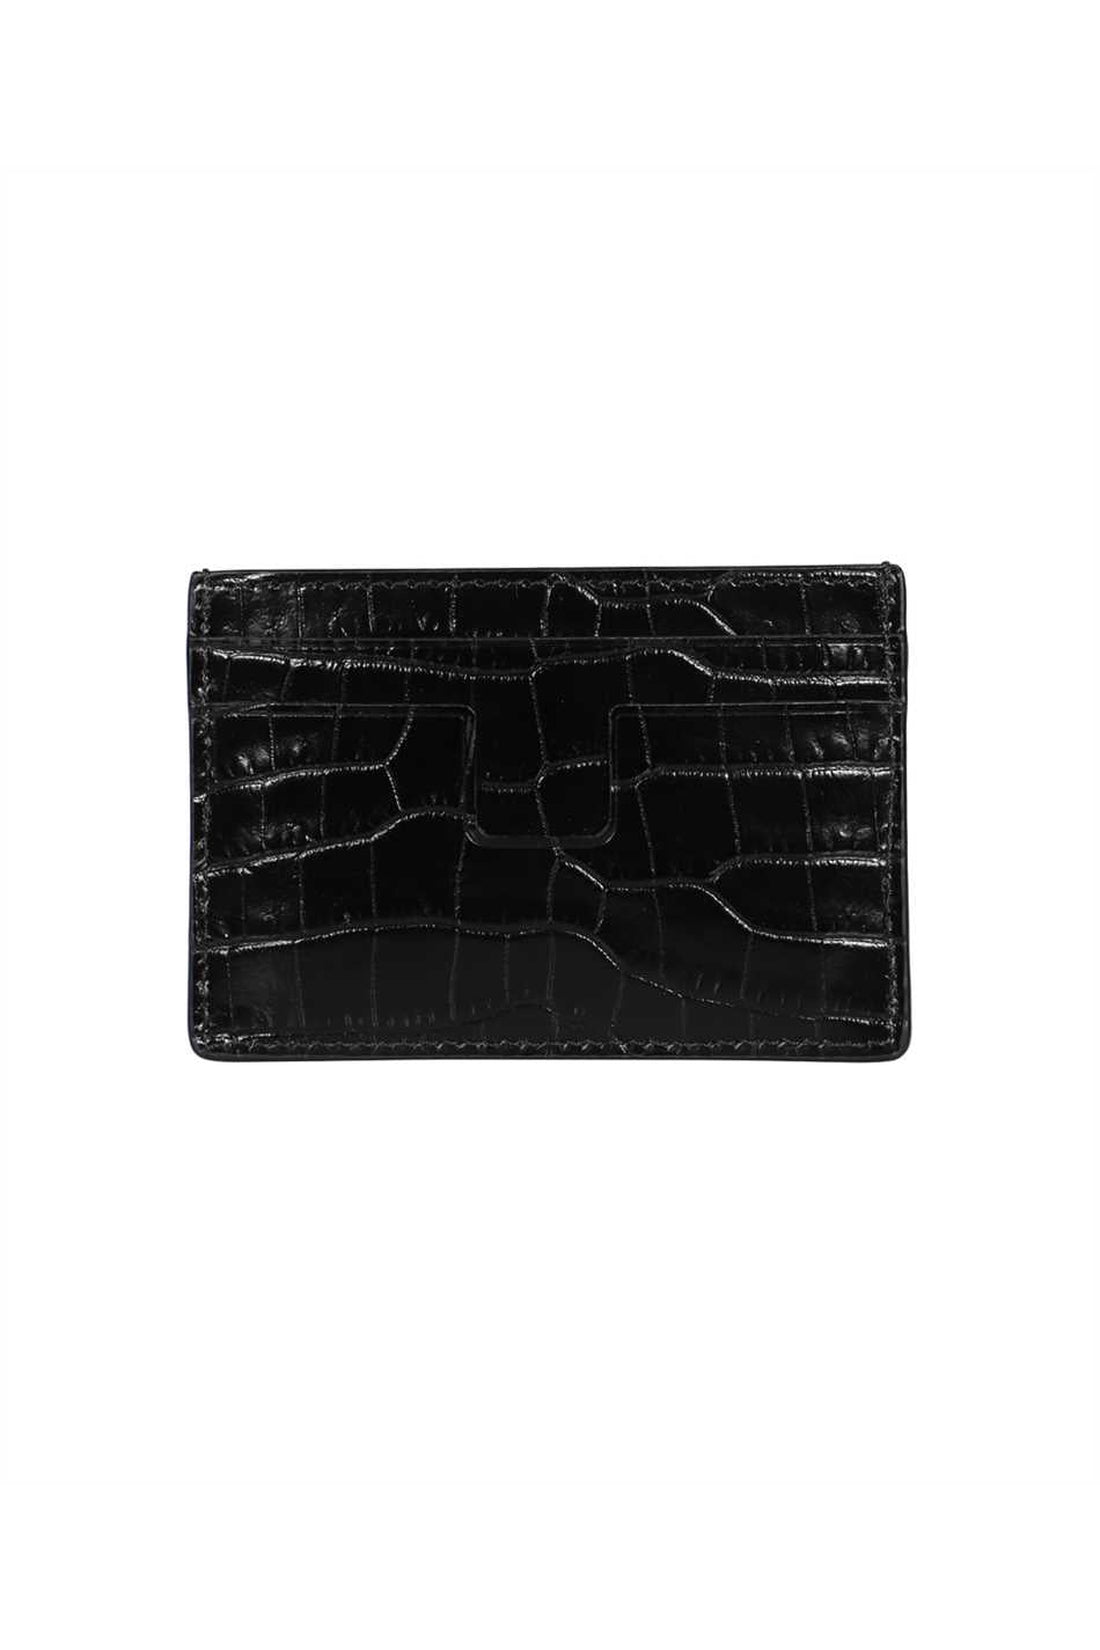 Tom Ford-OUTLET-SALE-Leather card holder-ARCHIVIST